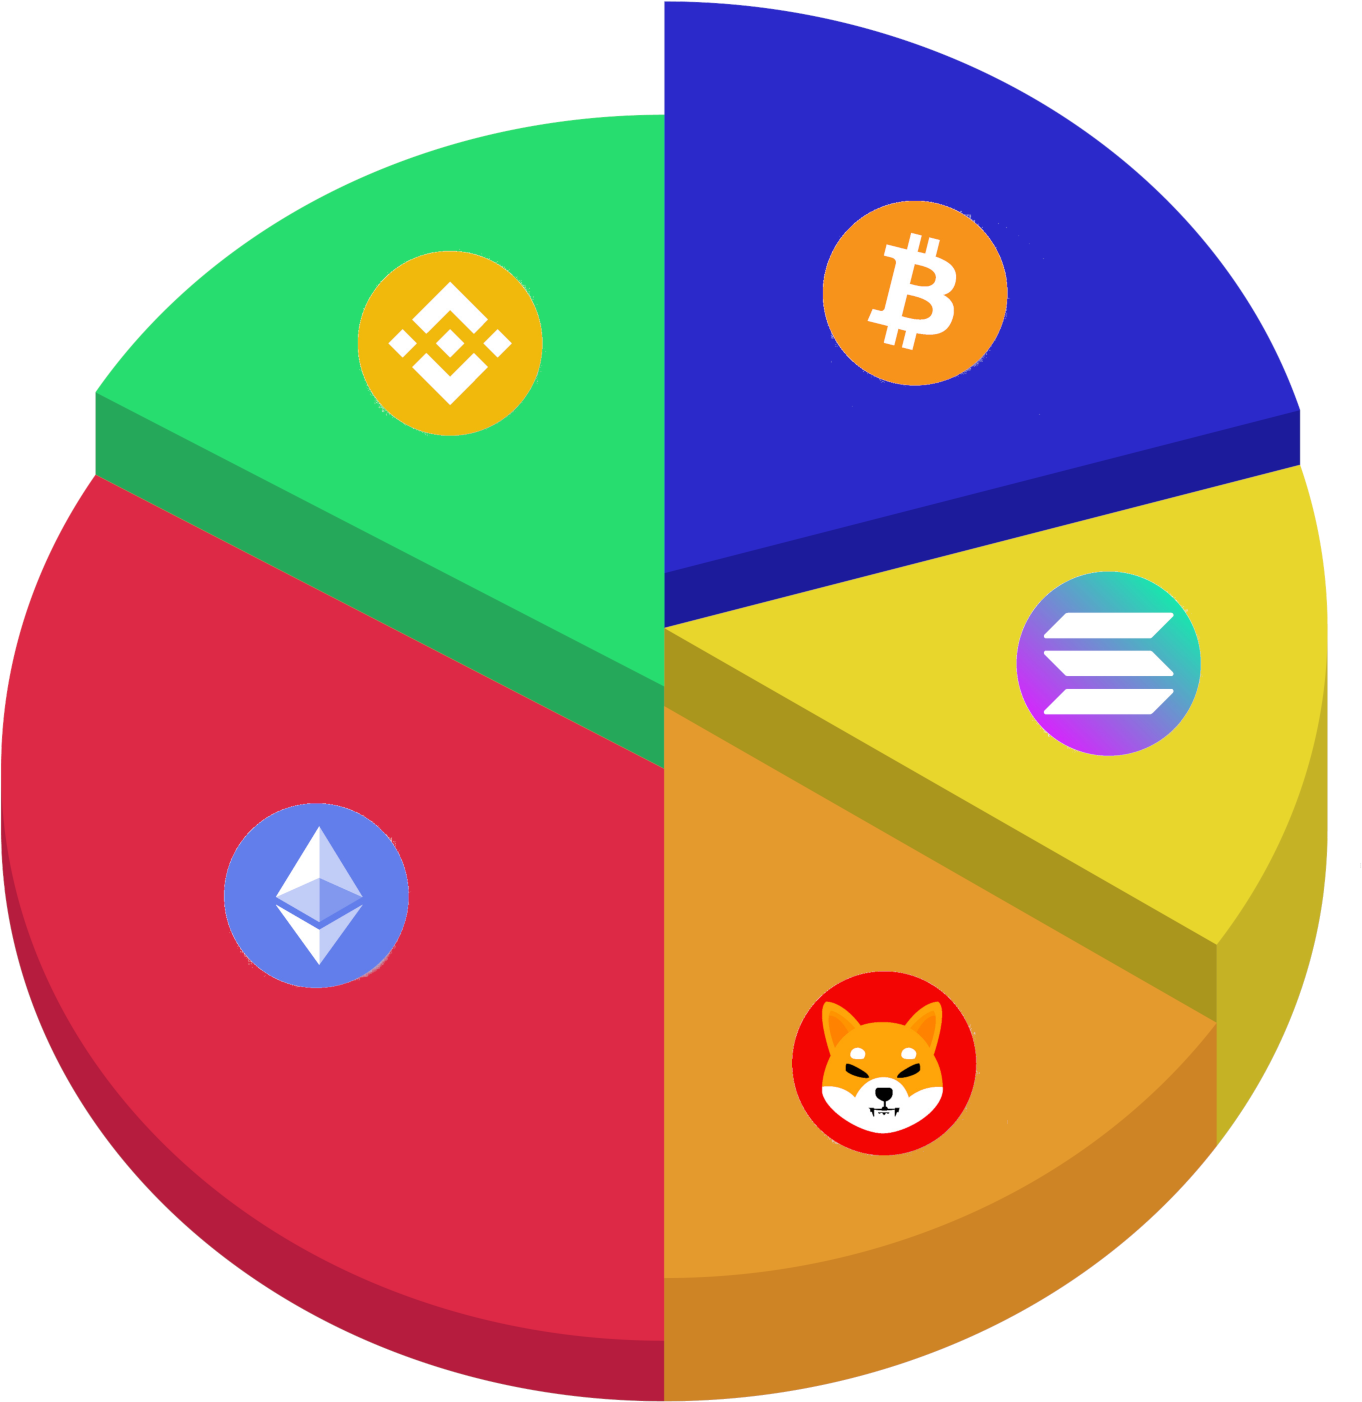 crypto basket example including top coins bitcoin, ethereum, solana, shiba inu and binance coin